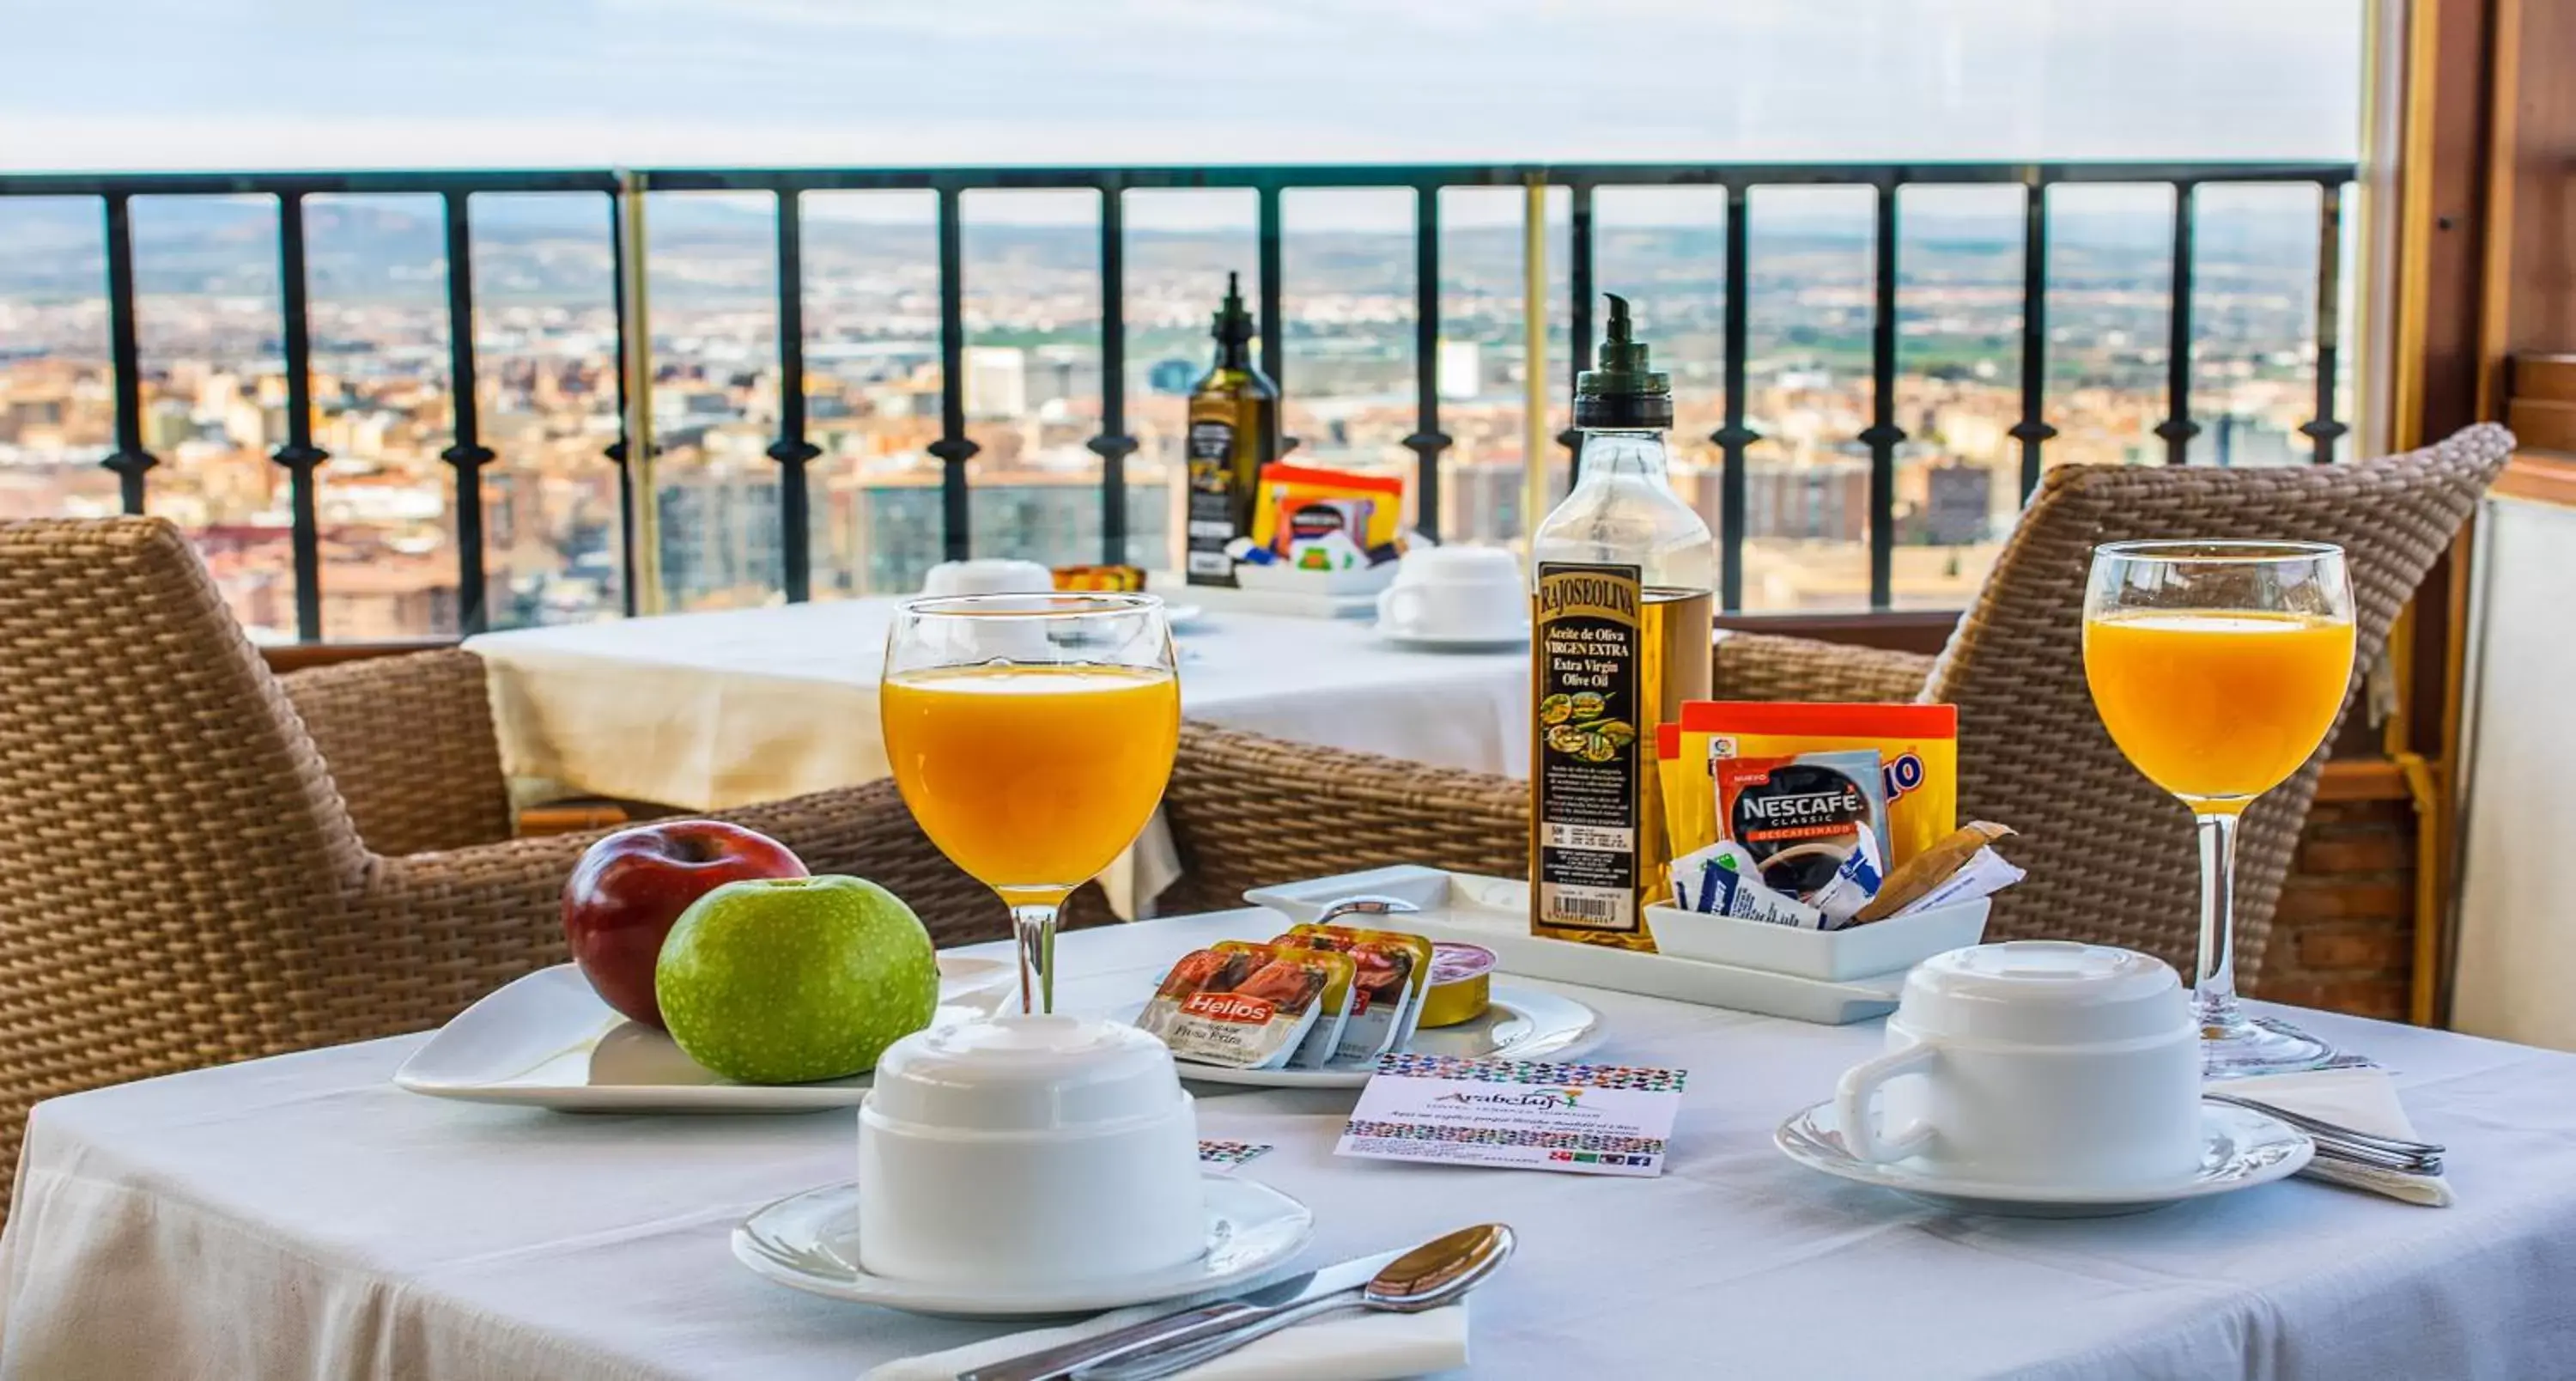 Continental breakfast in Hotel Mirador Arabeluj